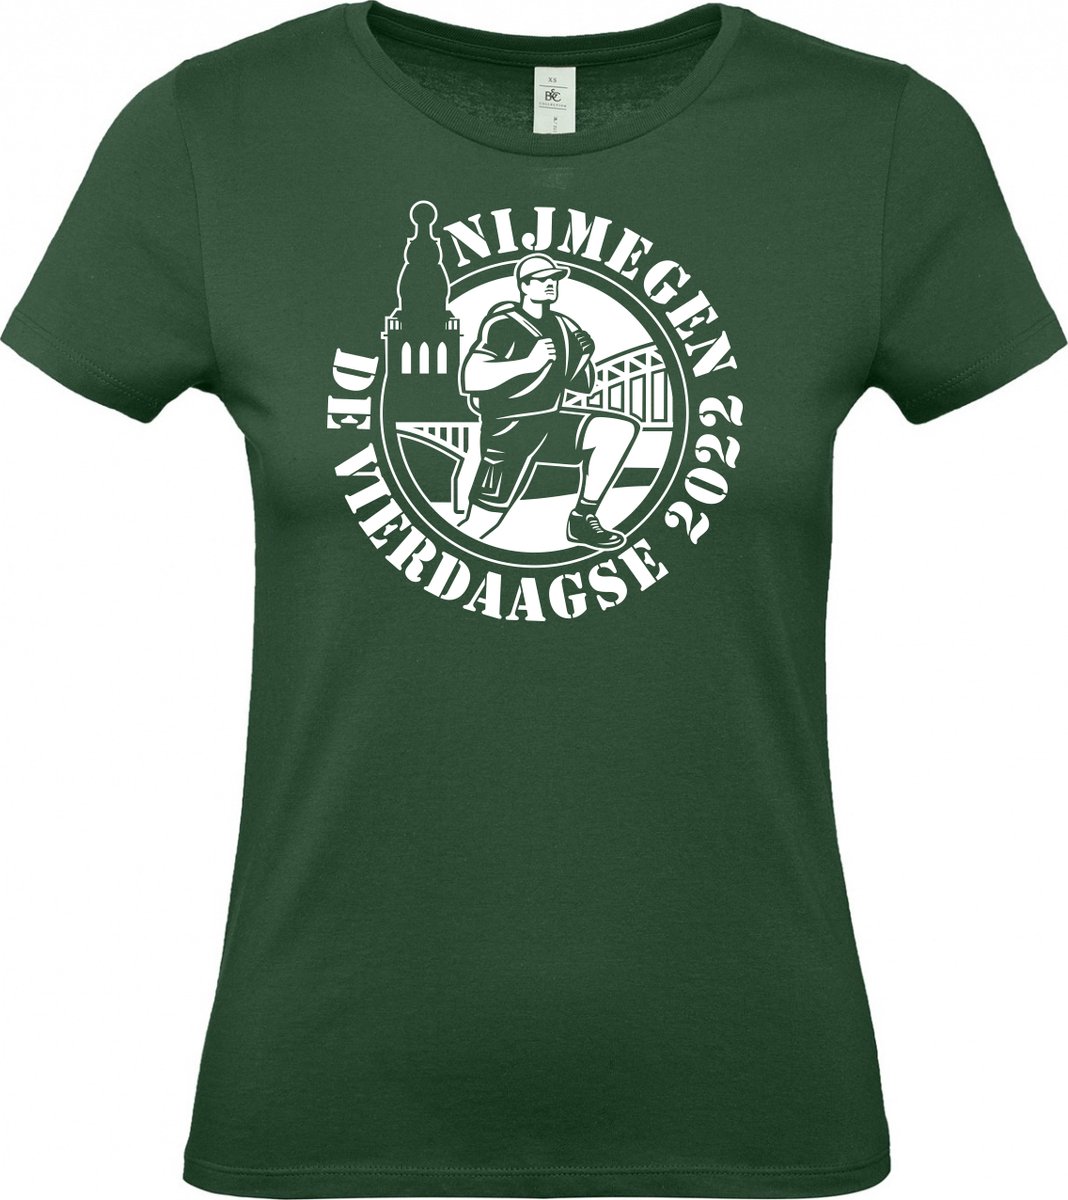 Dames t-shirt CartoonShirt De Vierdaagse |Wandelvierdaagse | Vierdaagse Nijmegen | Roze woensdag | Groen | maat L